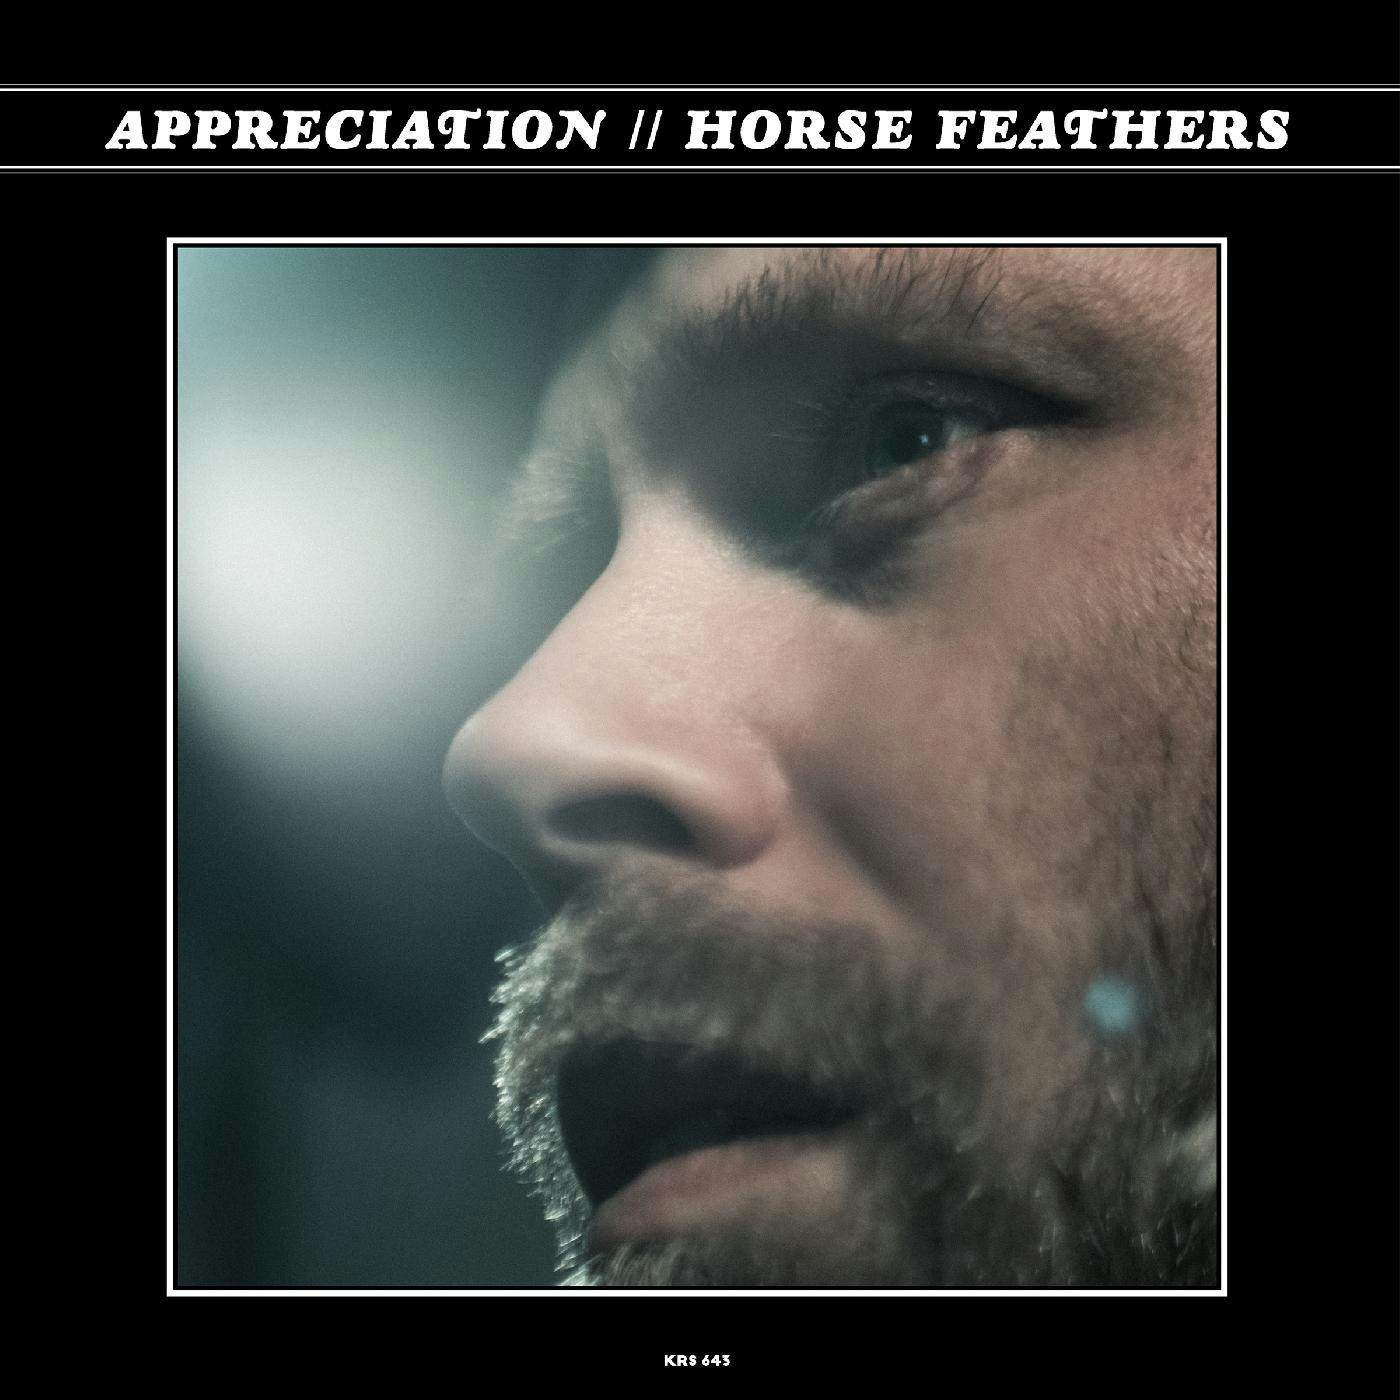 Horse Feathers Appreciation Vinyl Record